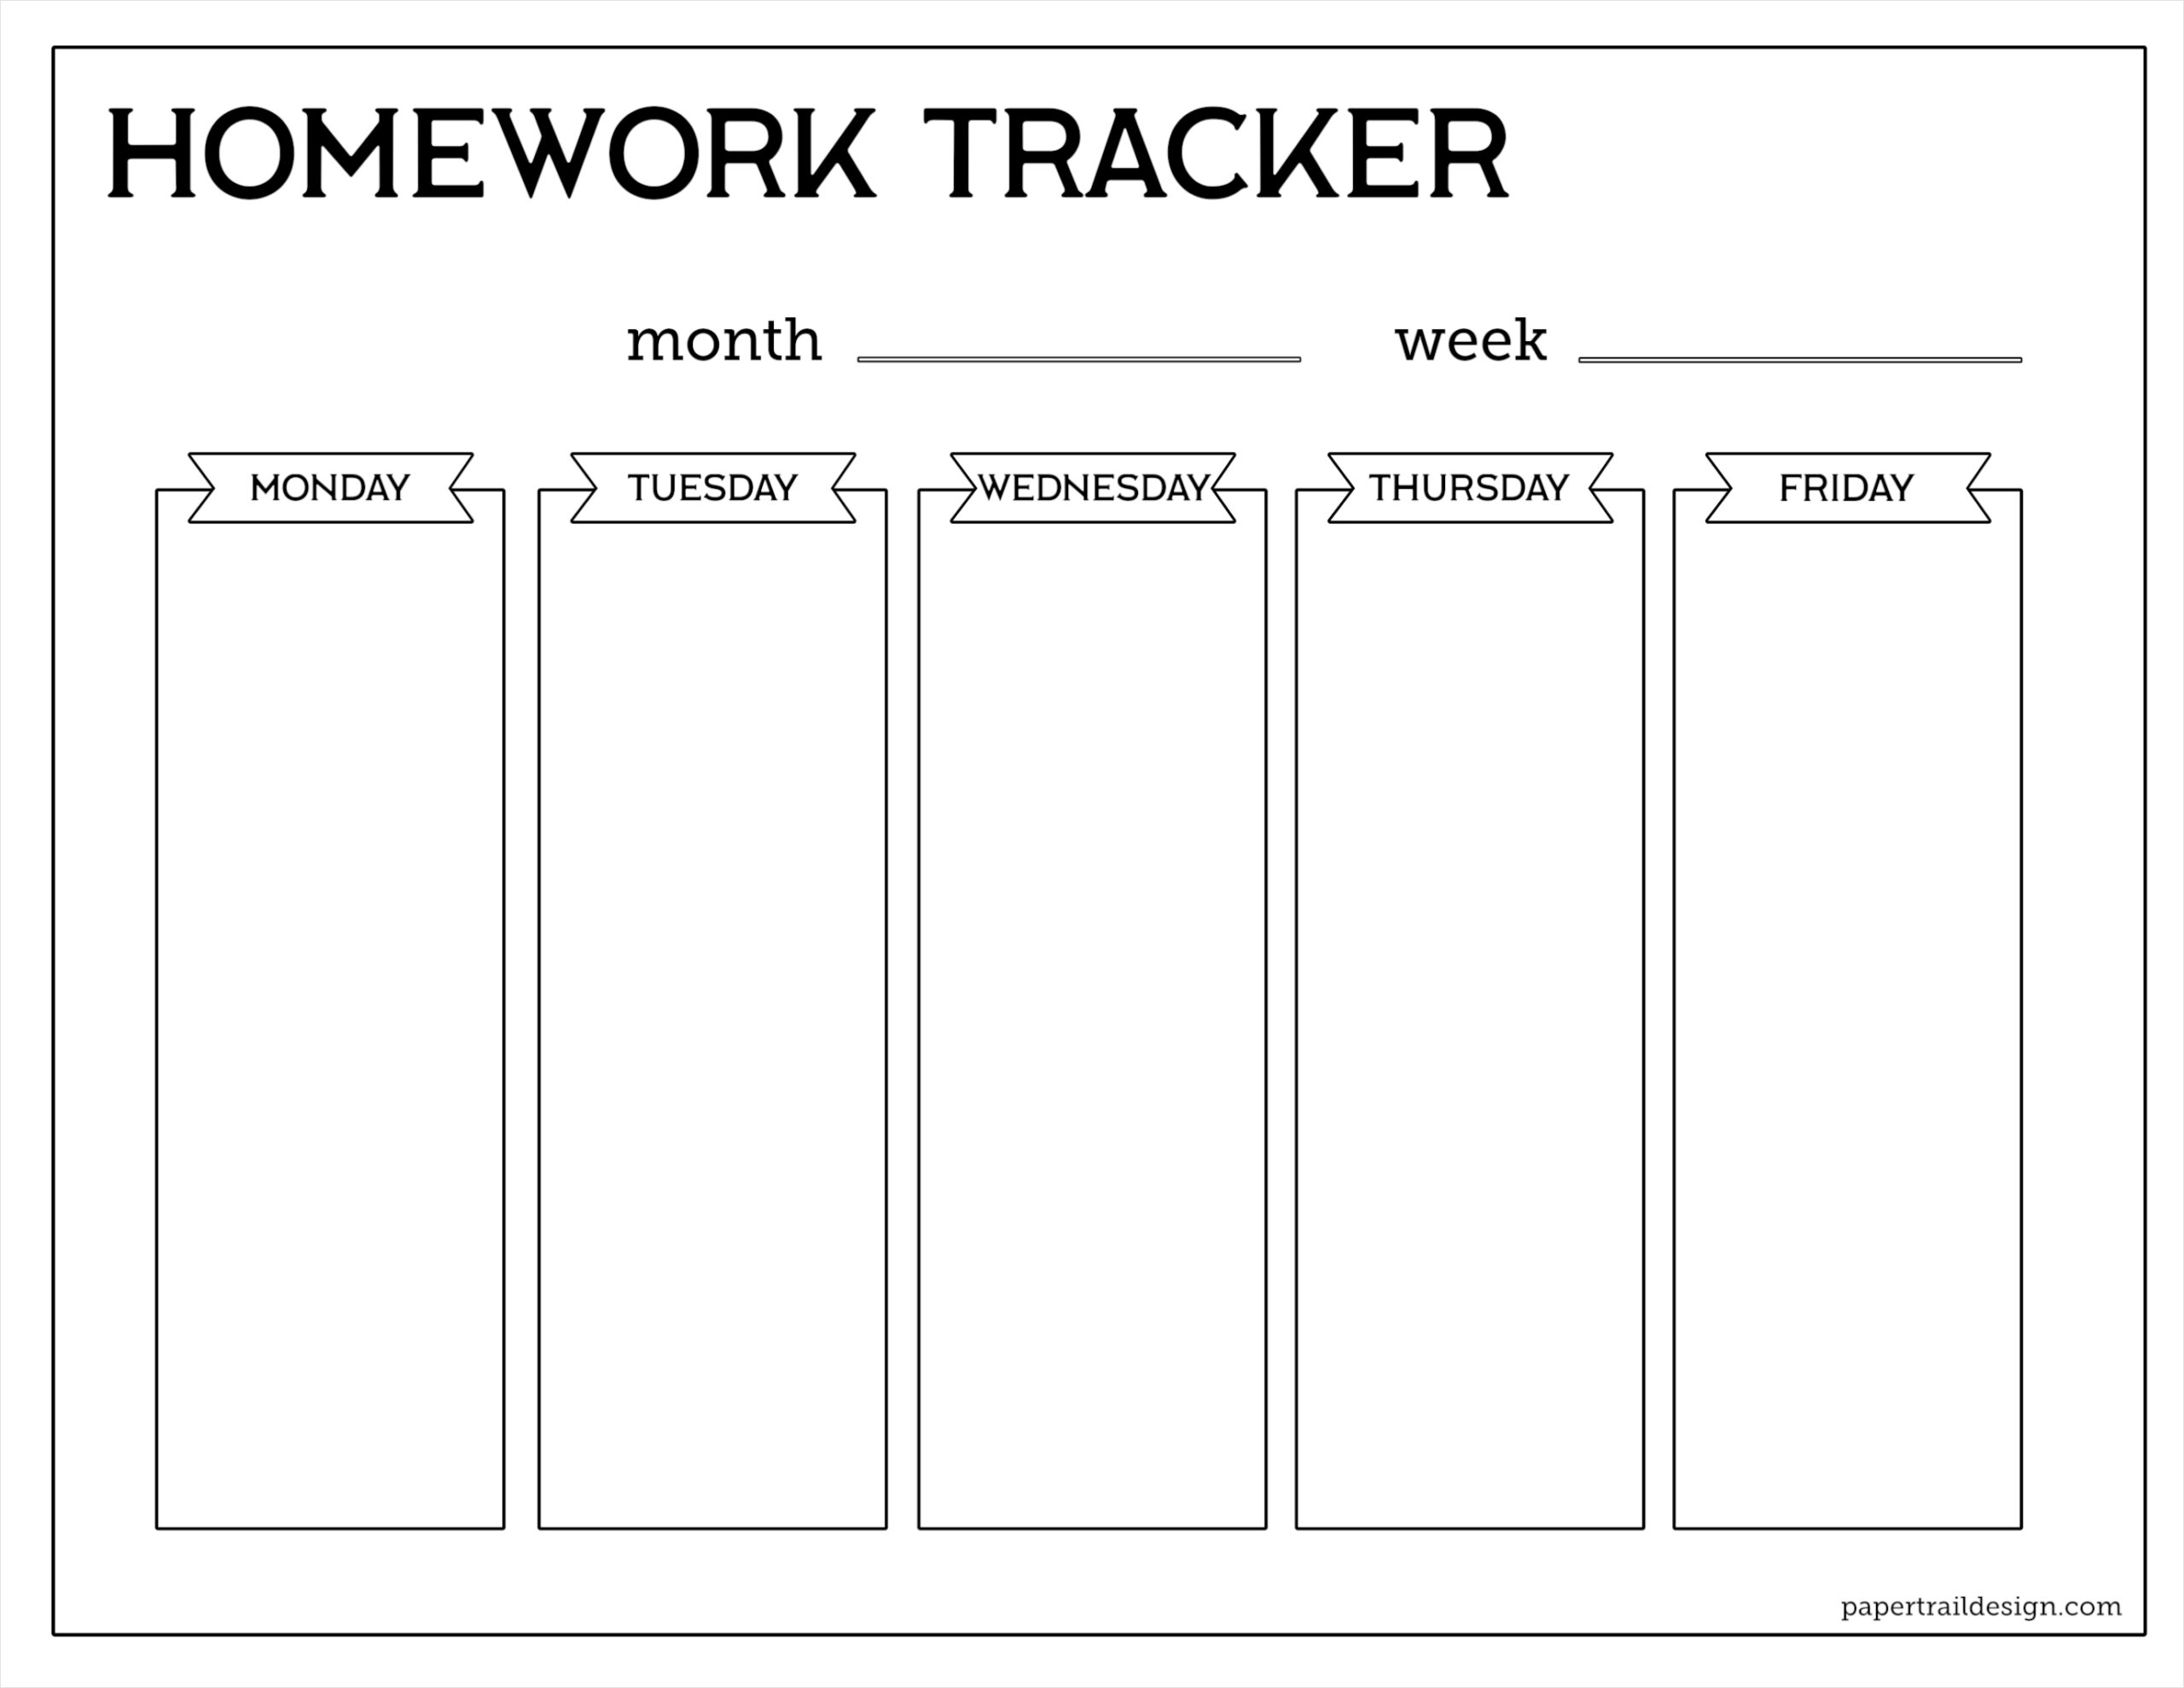 sample of homework planner template for students